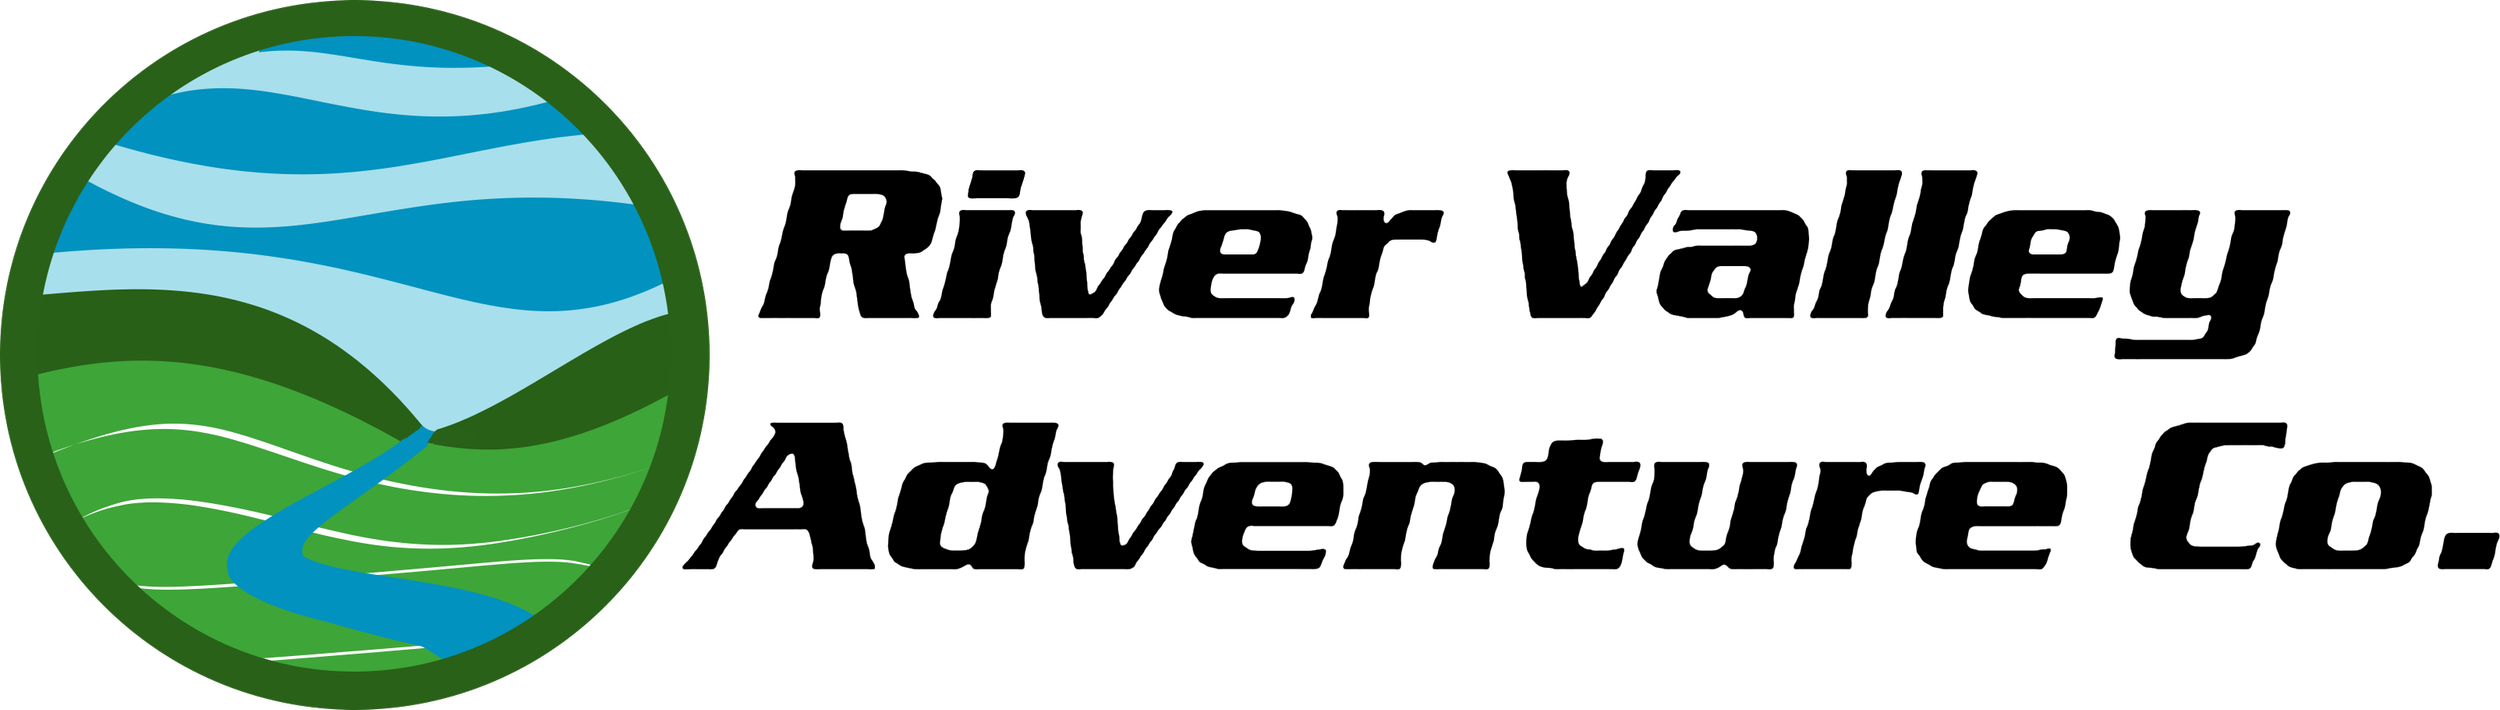 RVAC logo -words.png